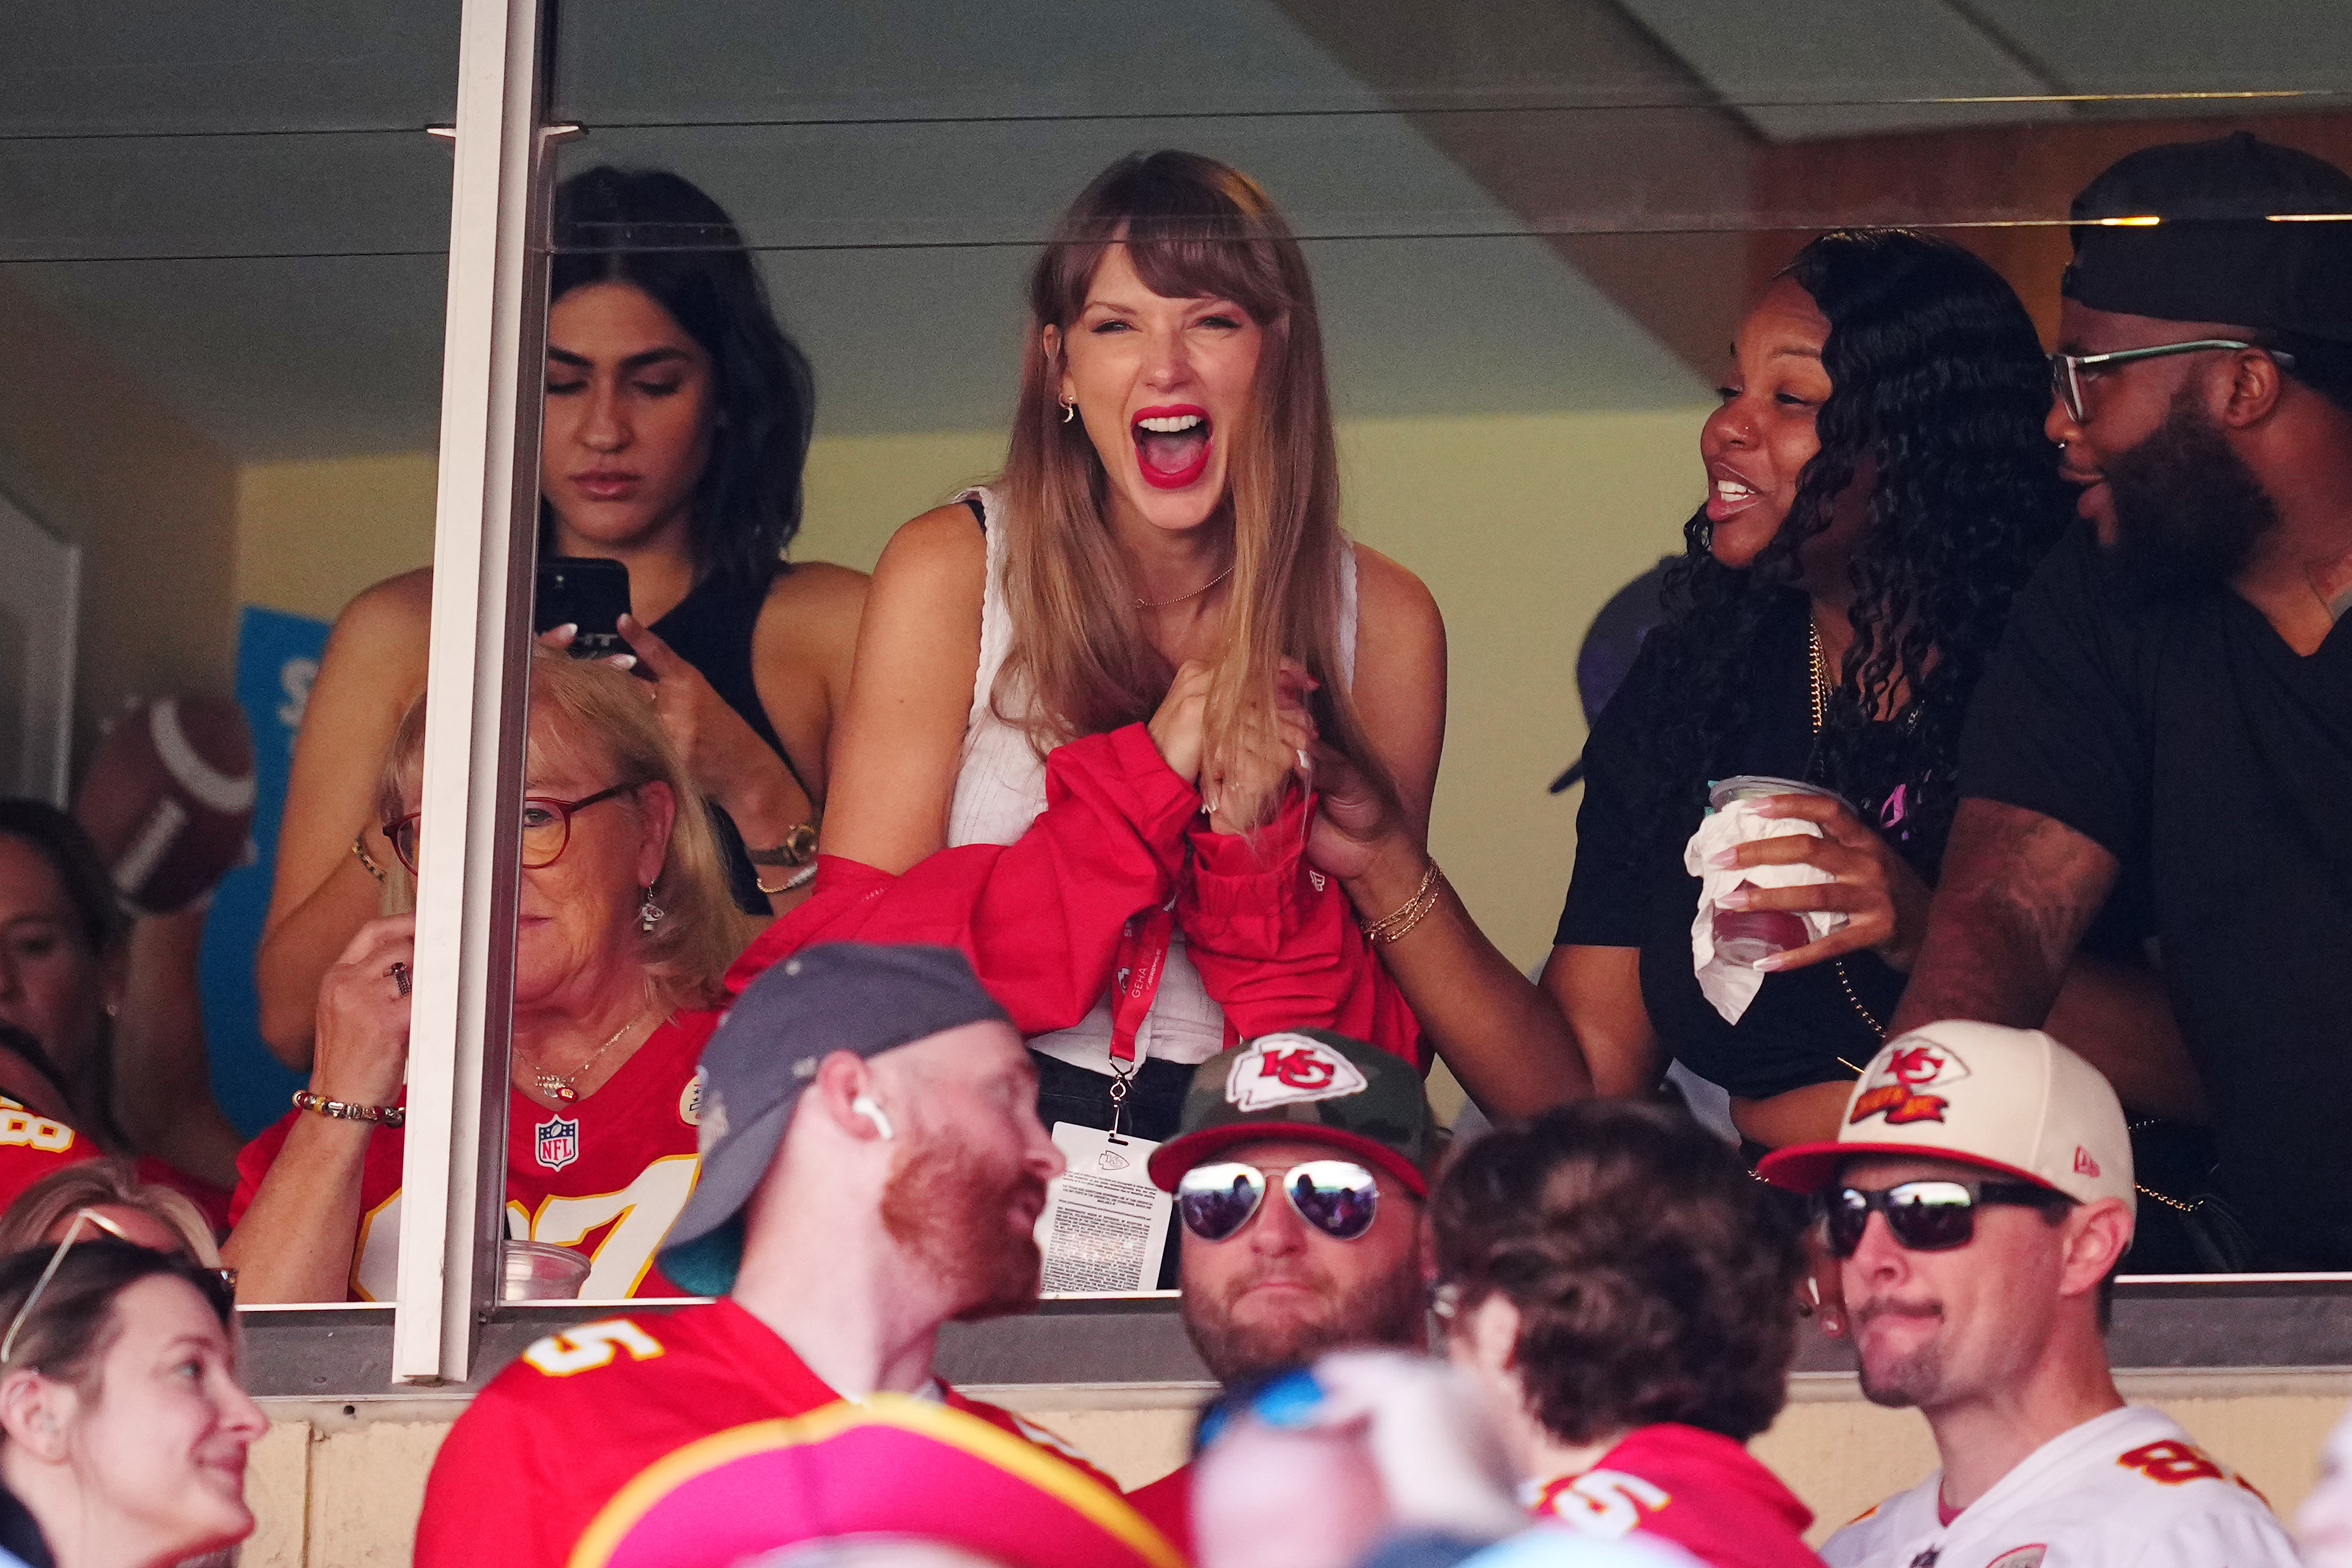 Taylor Swift cheering